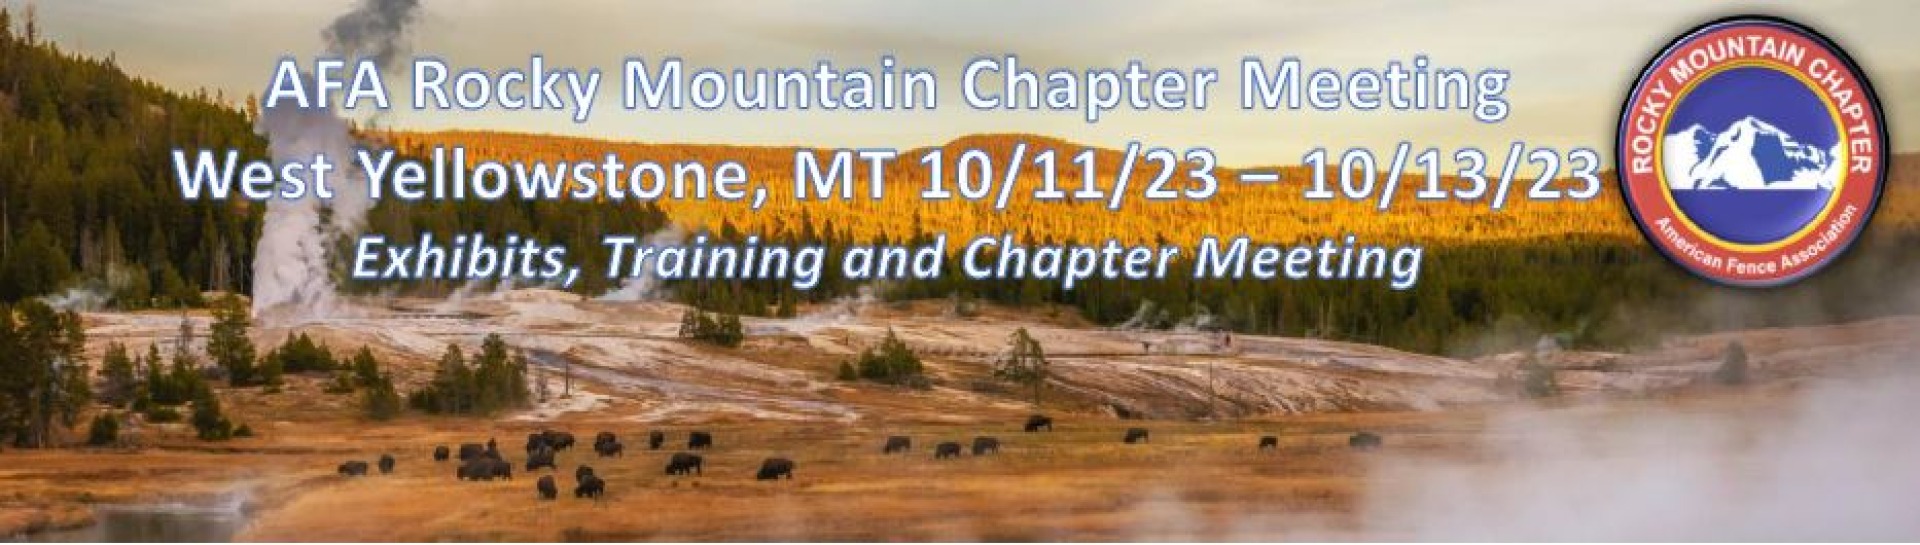 AFA Rocky Mountain Chapter Meeting